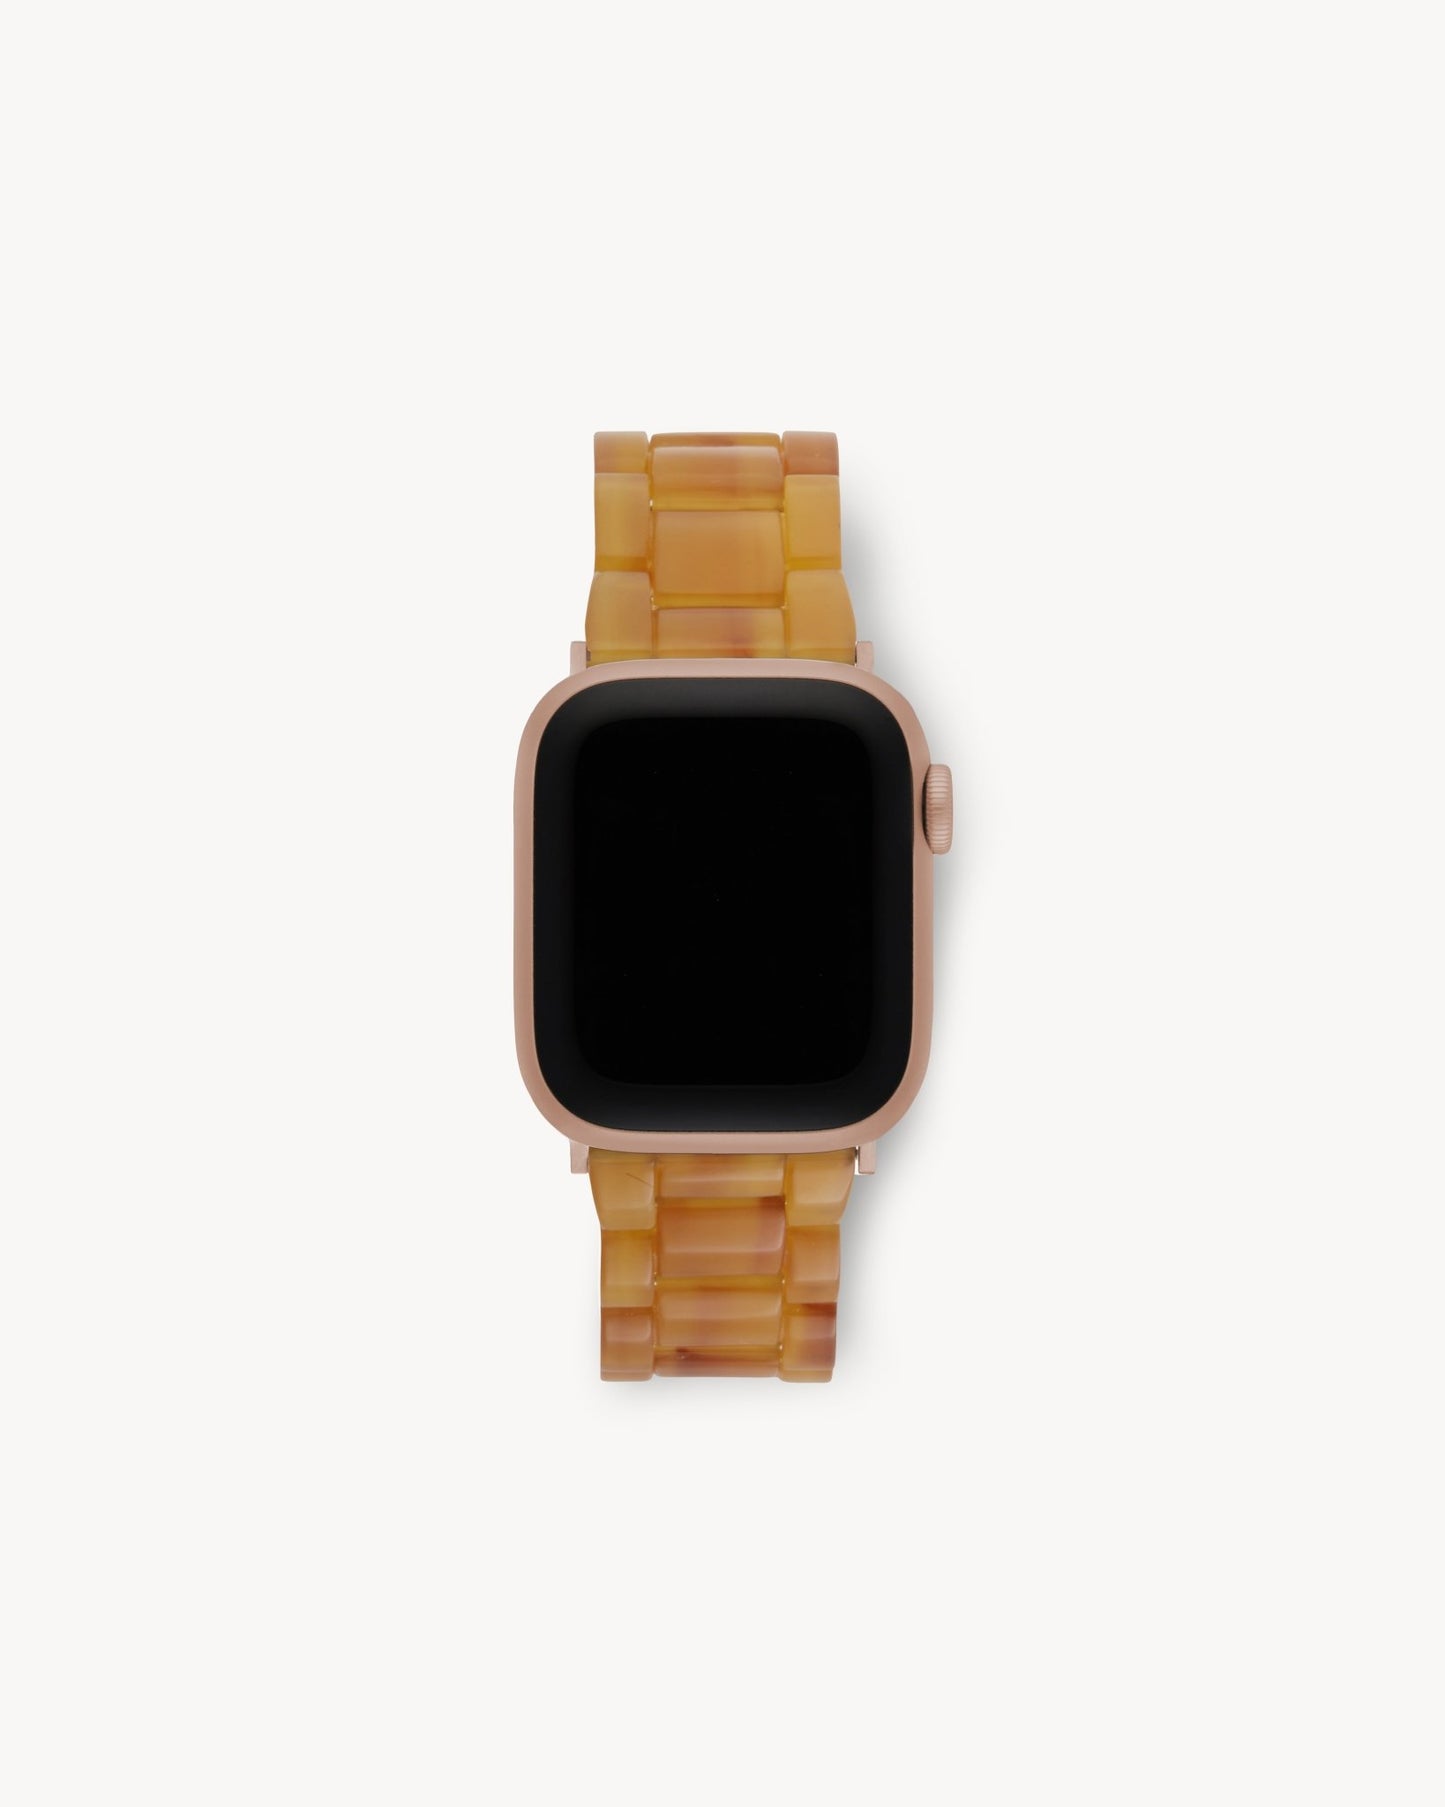 MACHETE Apple Watch Band in Cognac